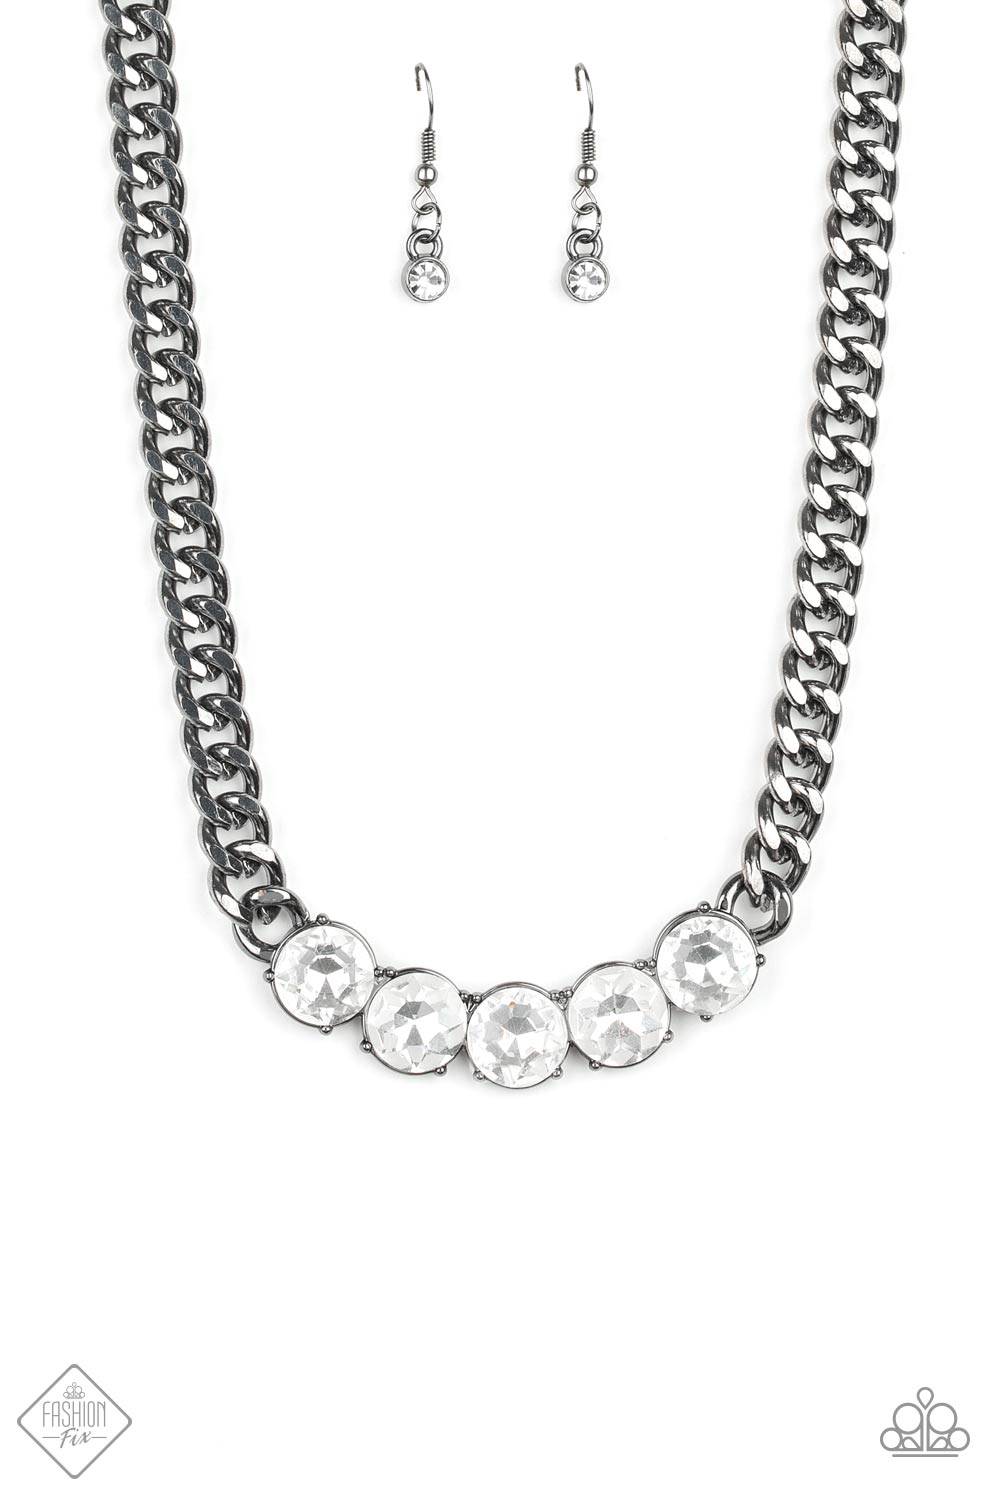 Rhinestone Renegade - Black Gunmetal Rhinestone Necklace - Paparazzi Accessories - GlaMarous Titi Jewels